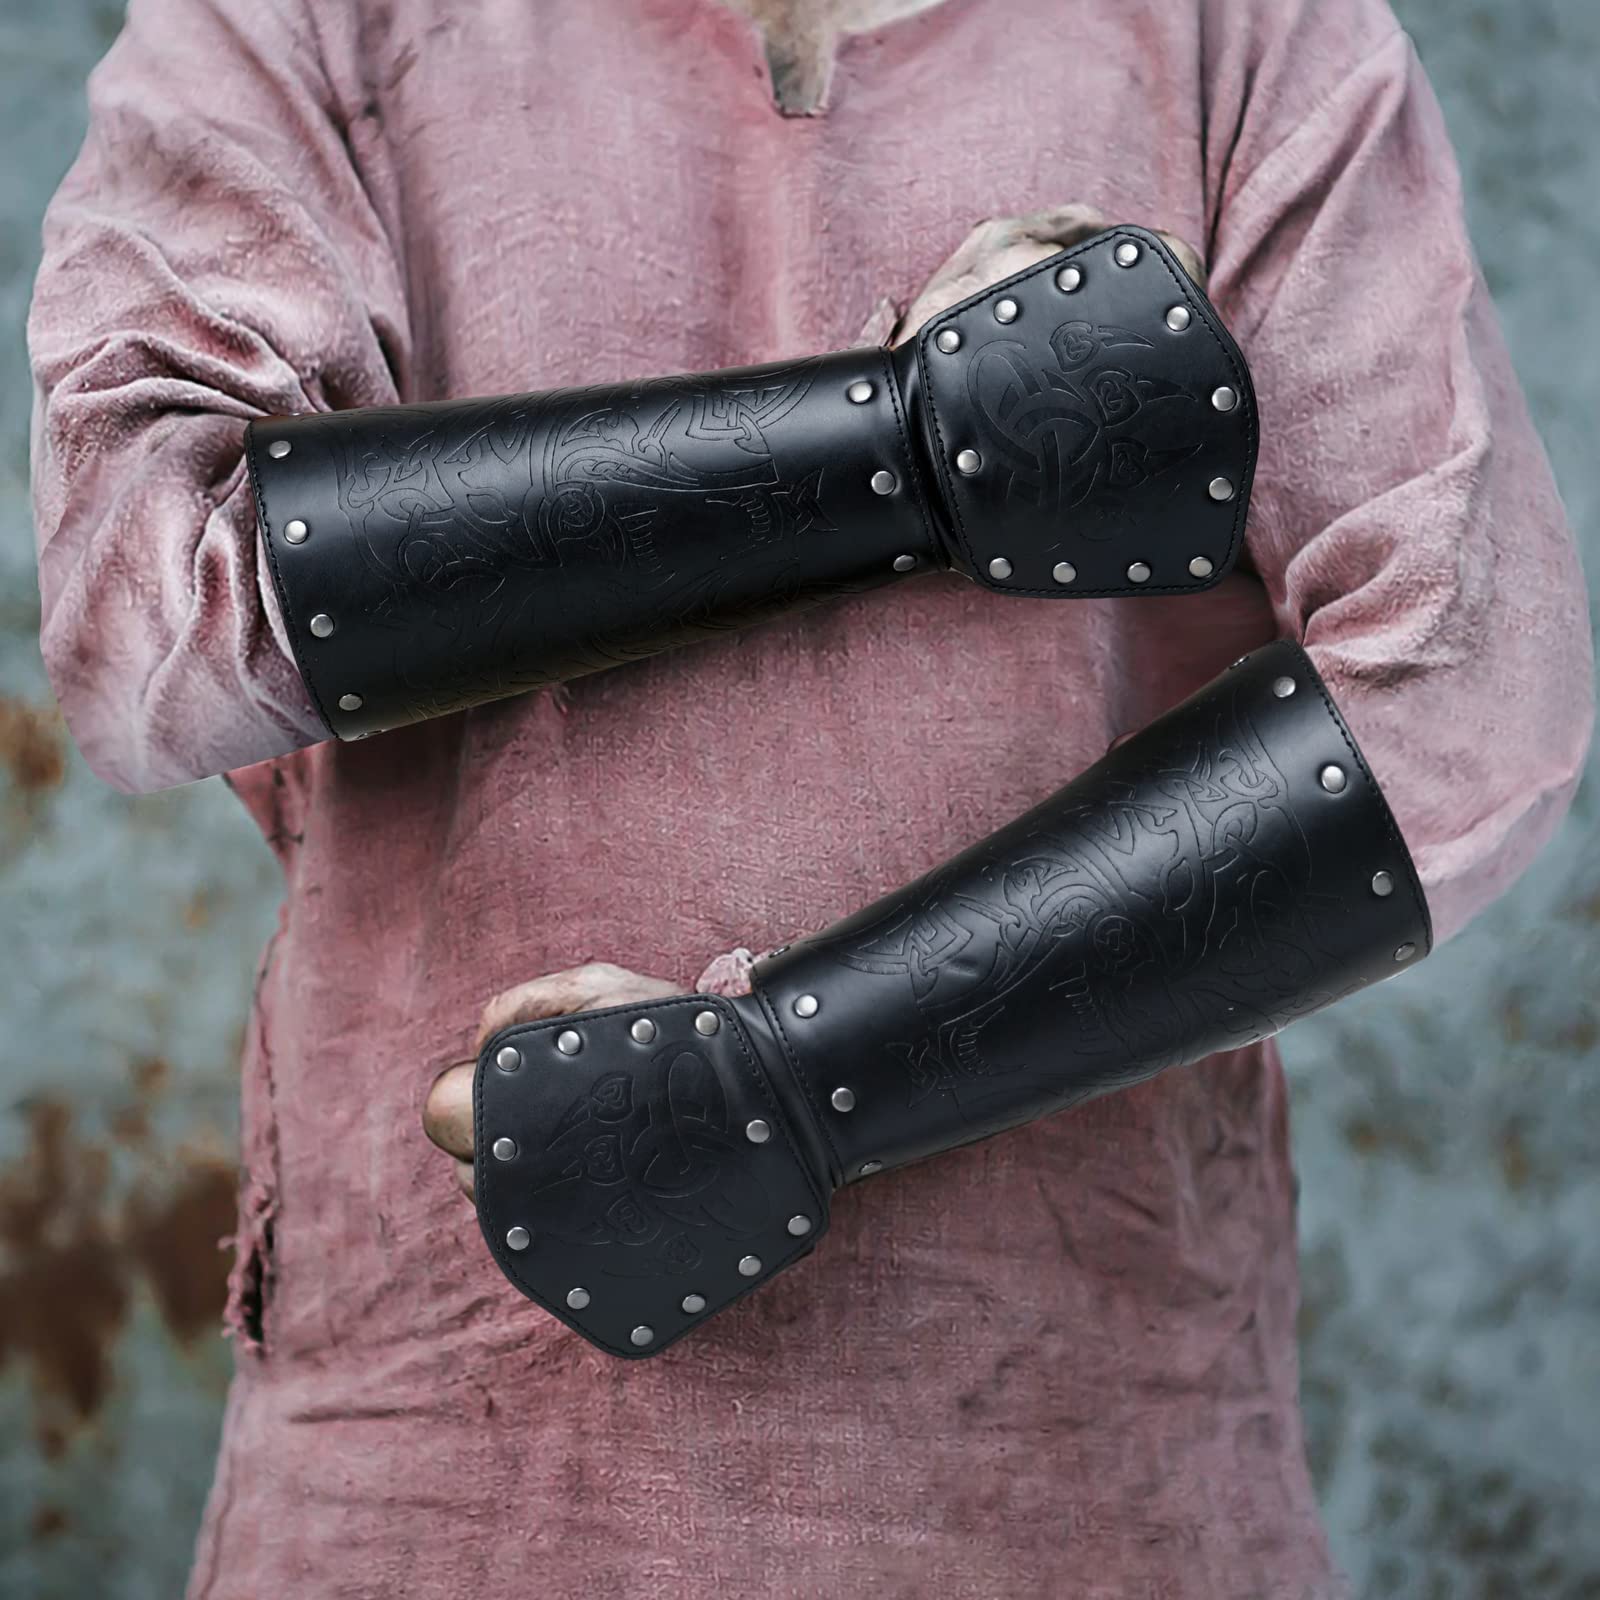 Steampunk Viking Leather Bracers Medieval Retro Gloves Vambraces